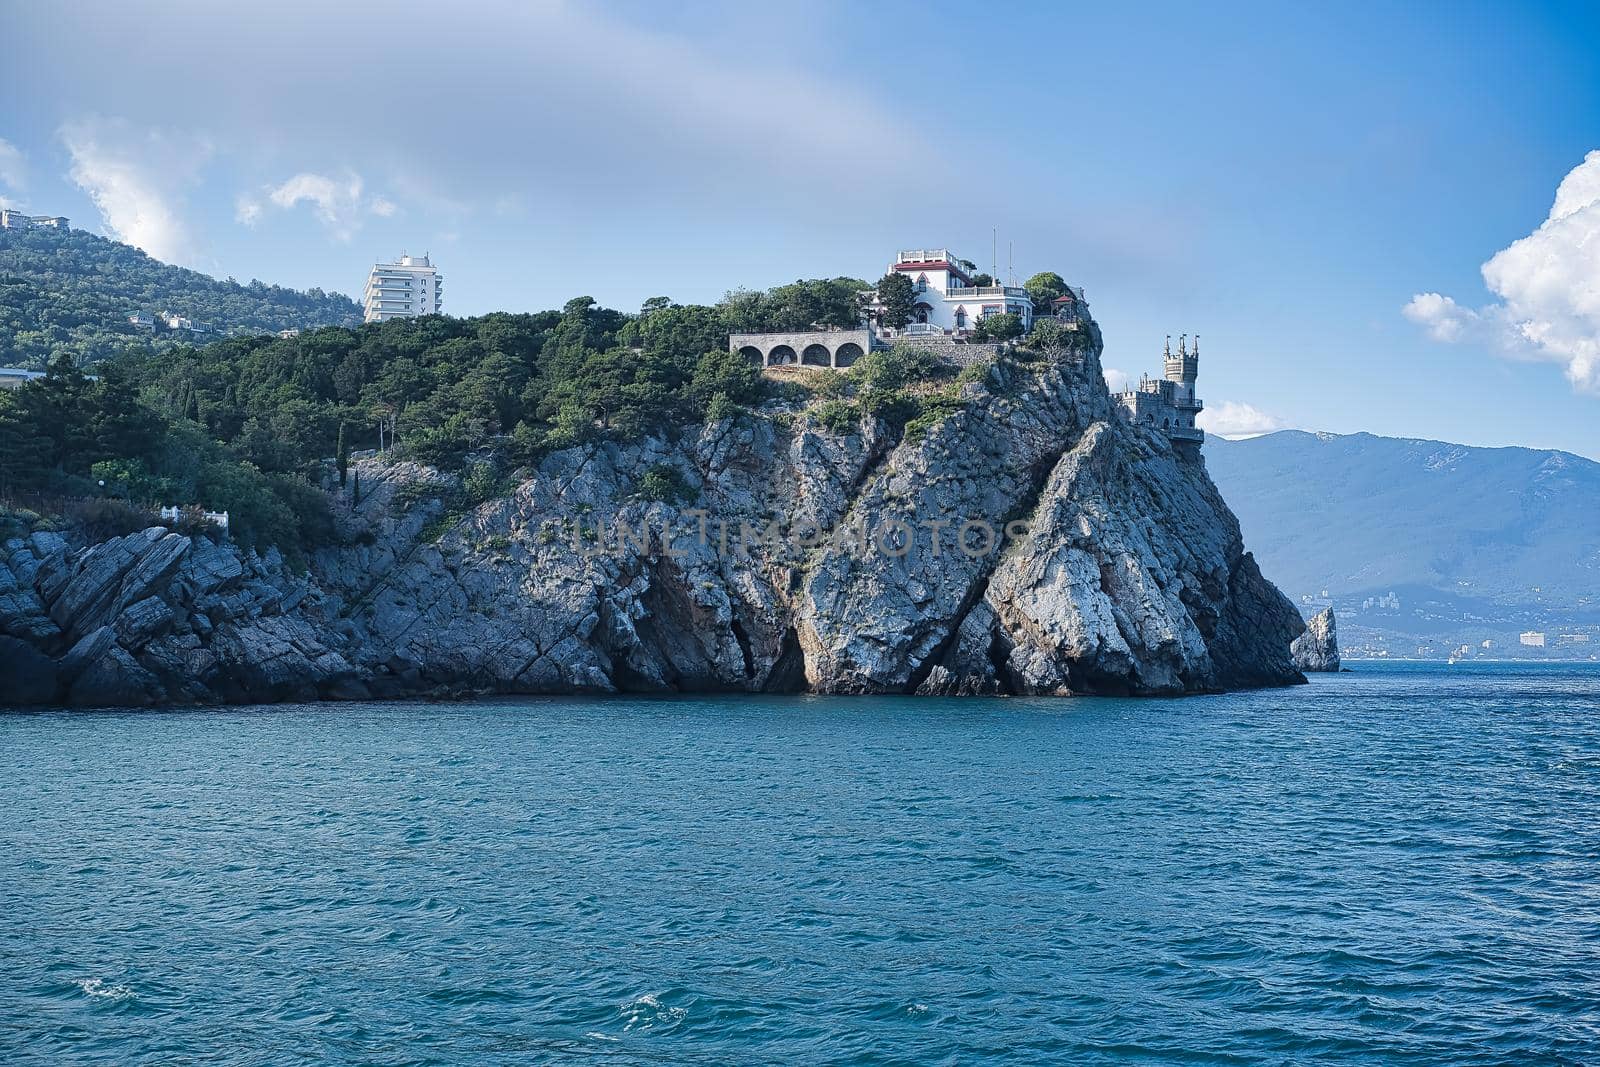 Seascape with a view of the coastline of Yalta, Crimea